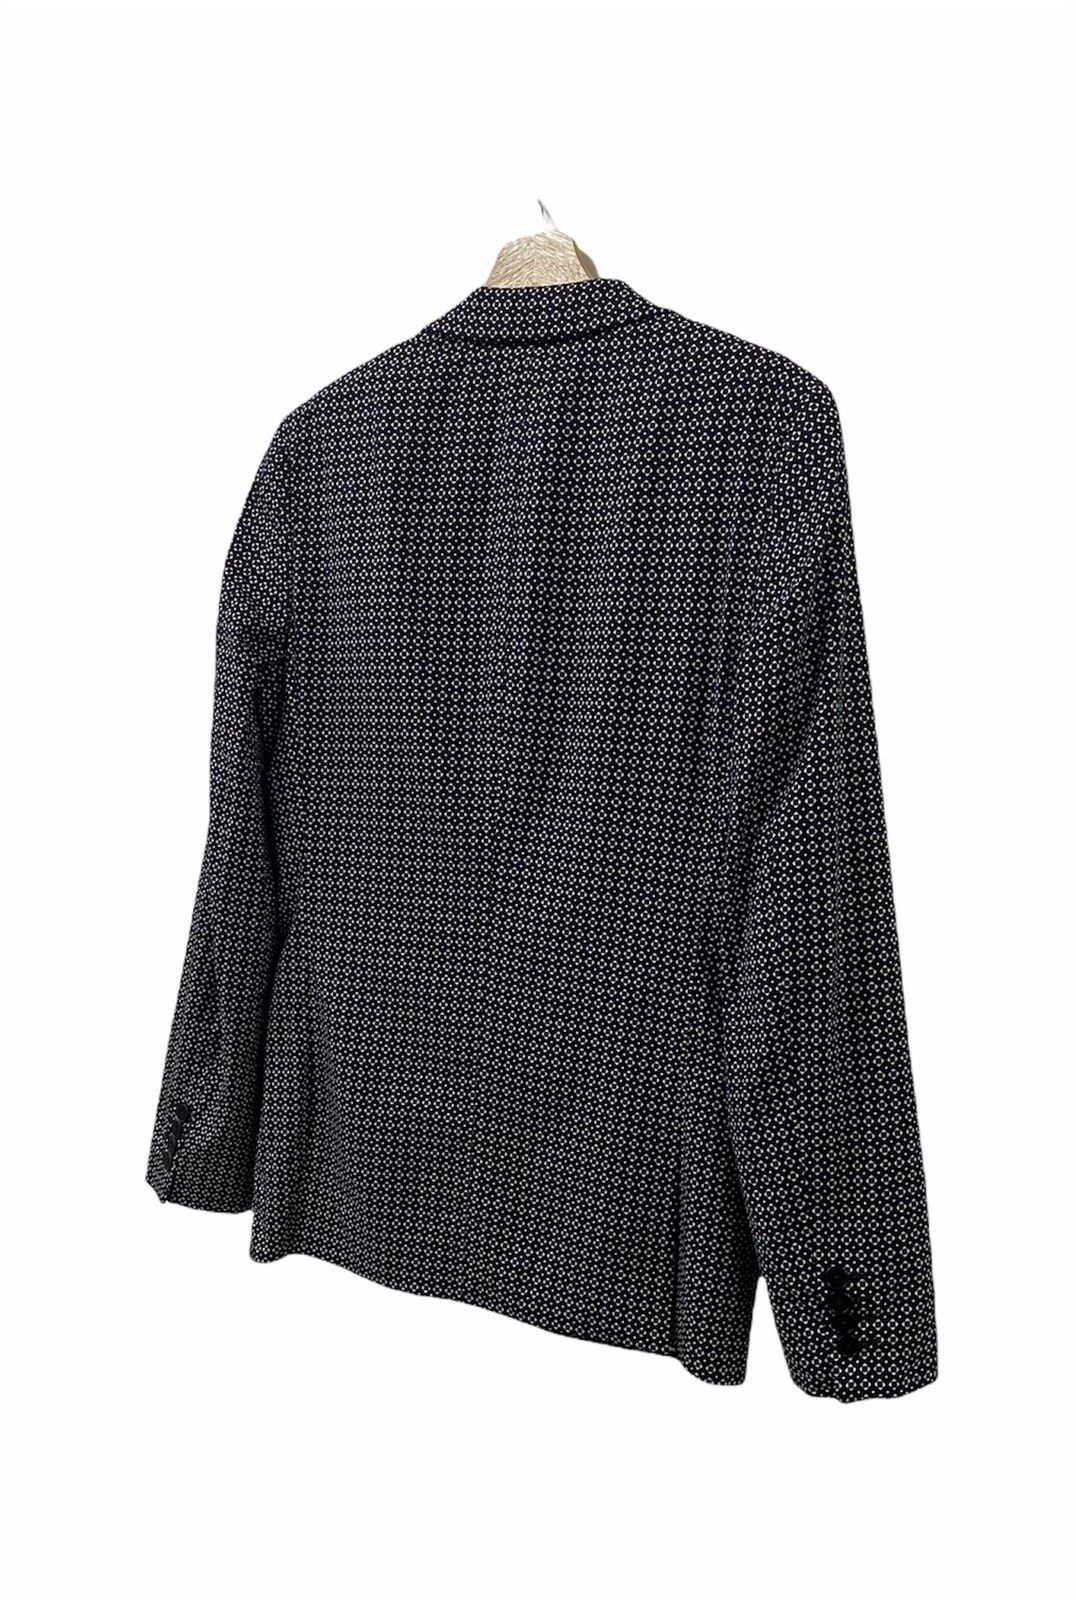 Rare🌑Paul Smith Uk Blazer Style Jacket Geometric Design - 11